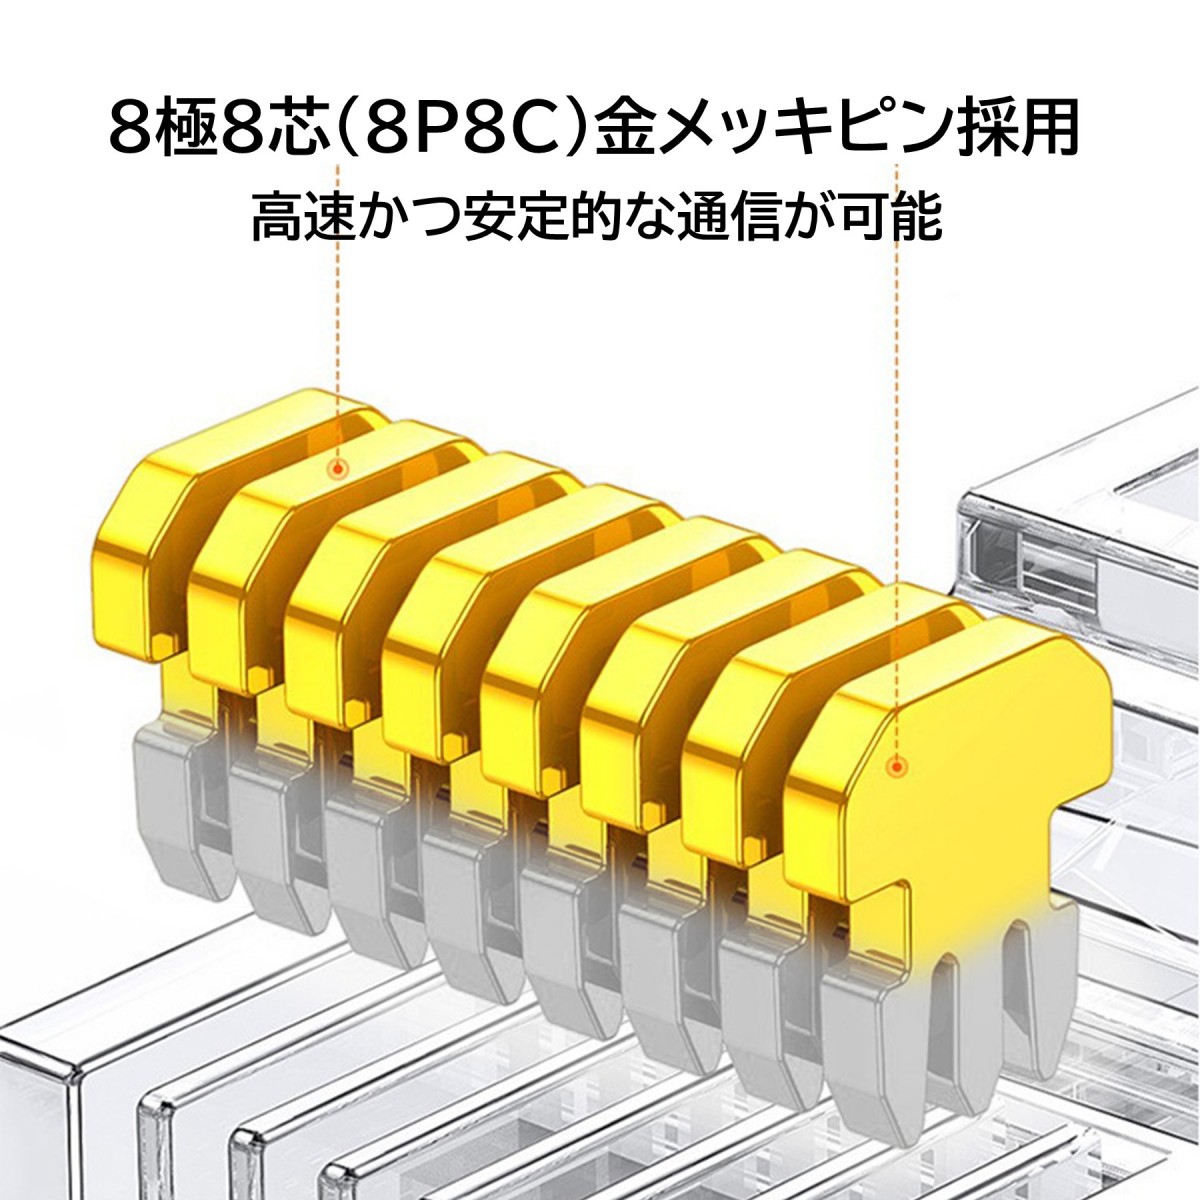 LAN коннектор LAN кабель 30 штук lan коннектор RJ45 Cat6 Cat5e соответствует не проникать type одиночный линия yoli линия соответствует 30 шт. комплект 